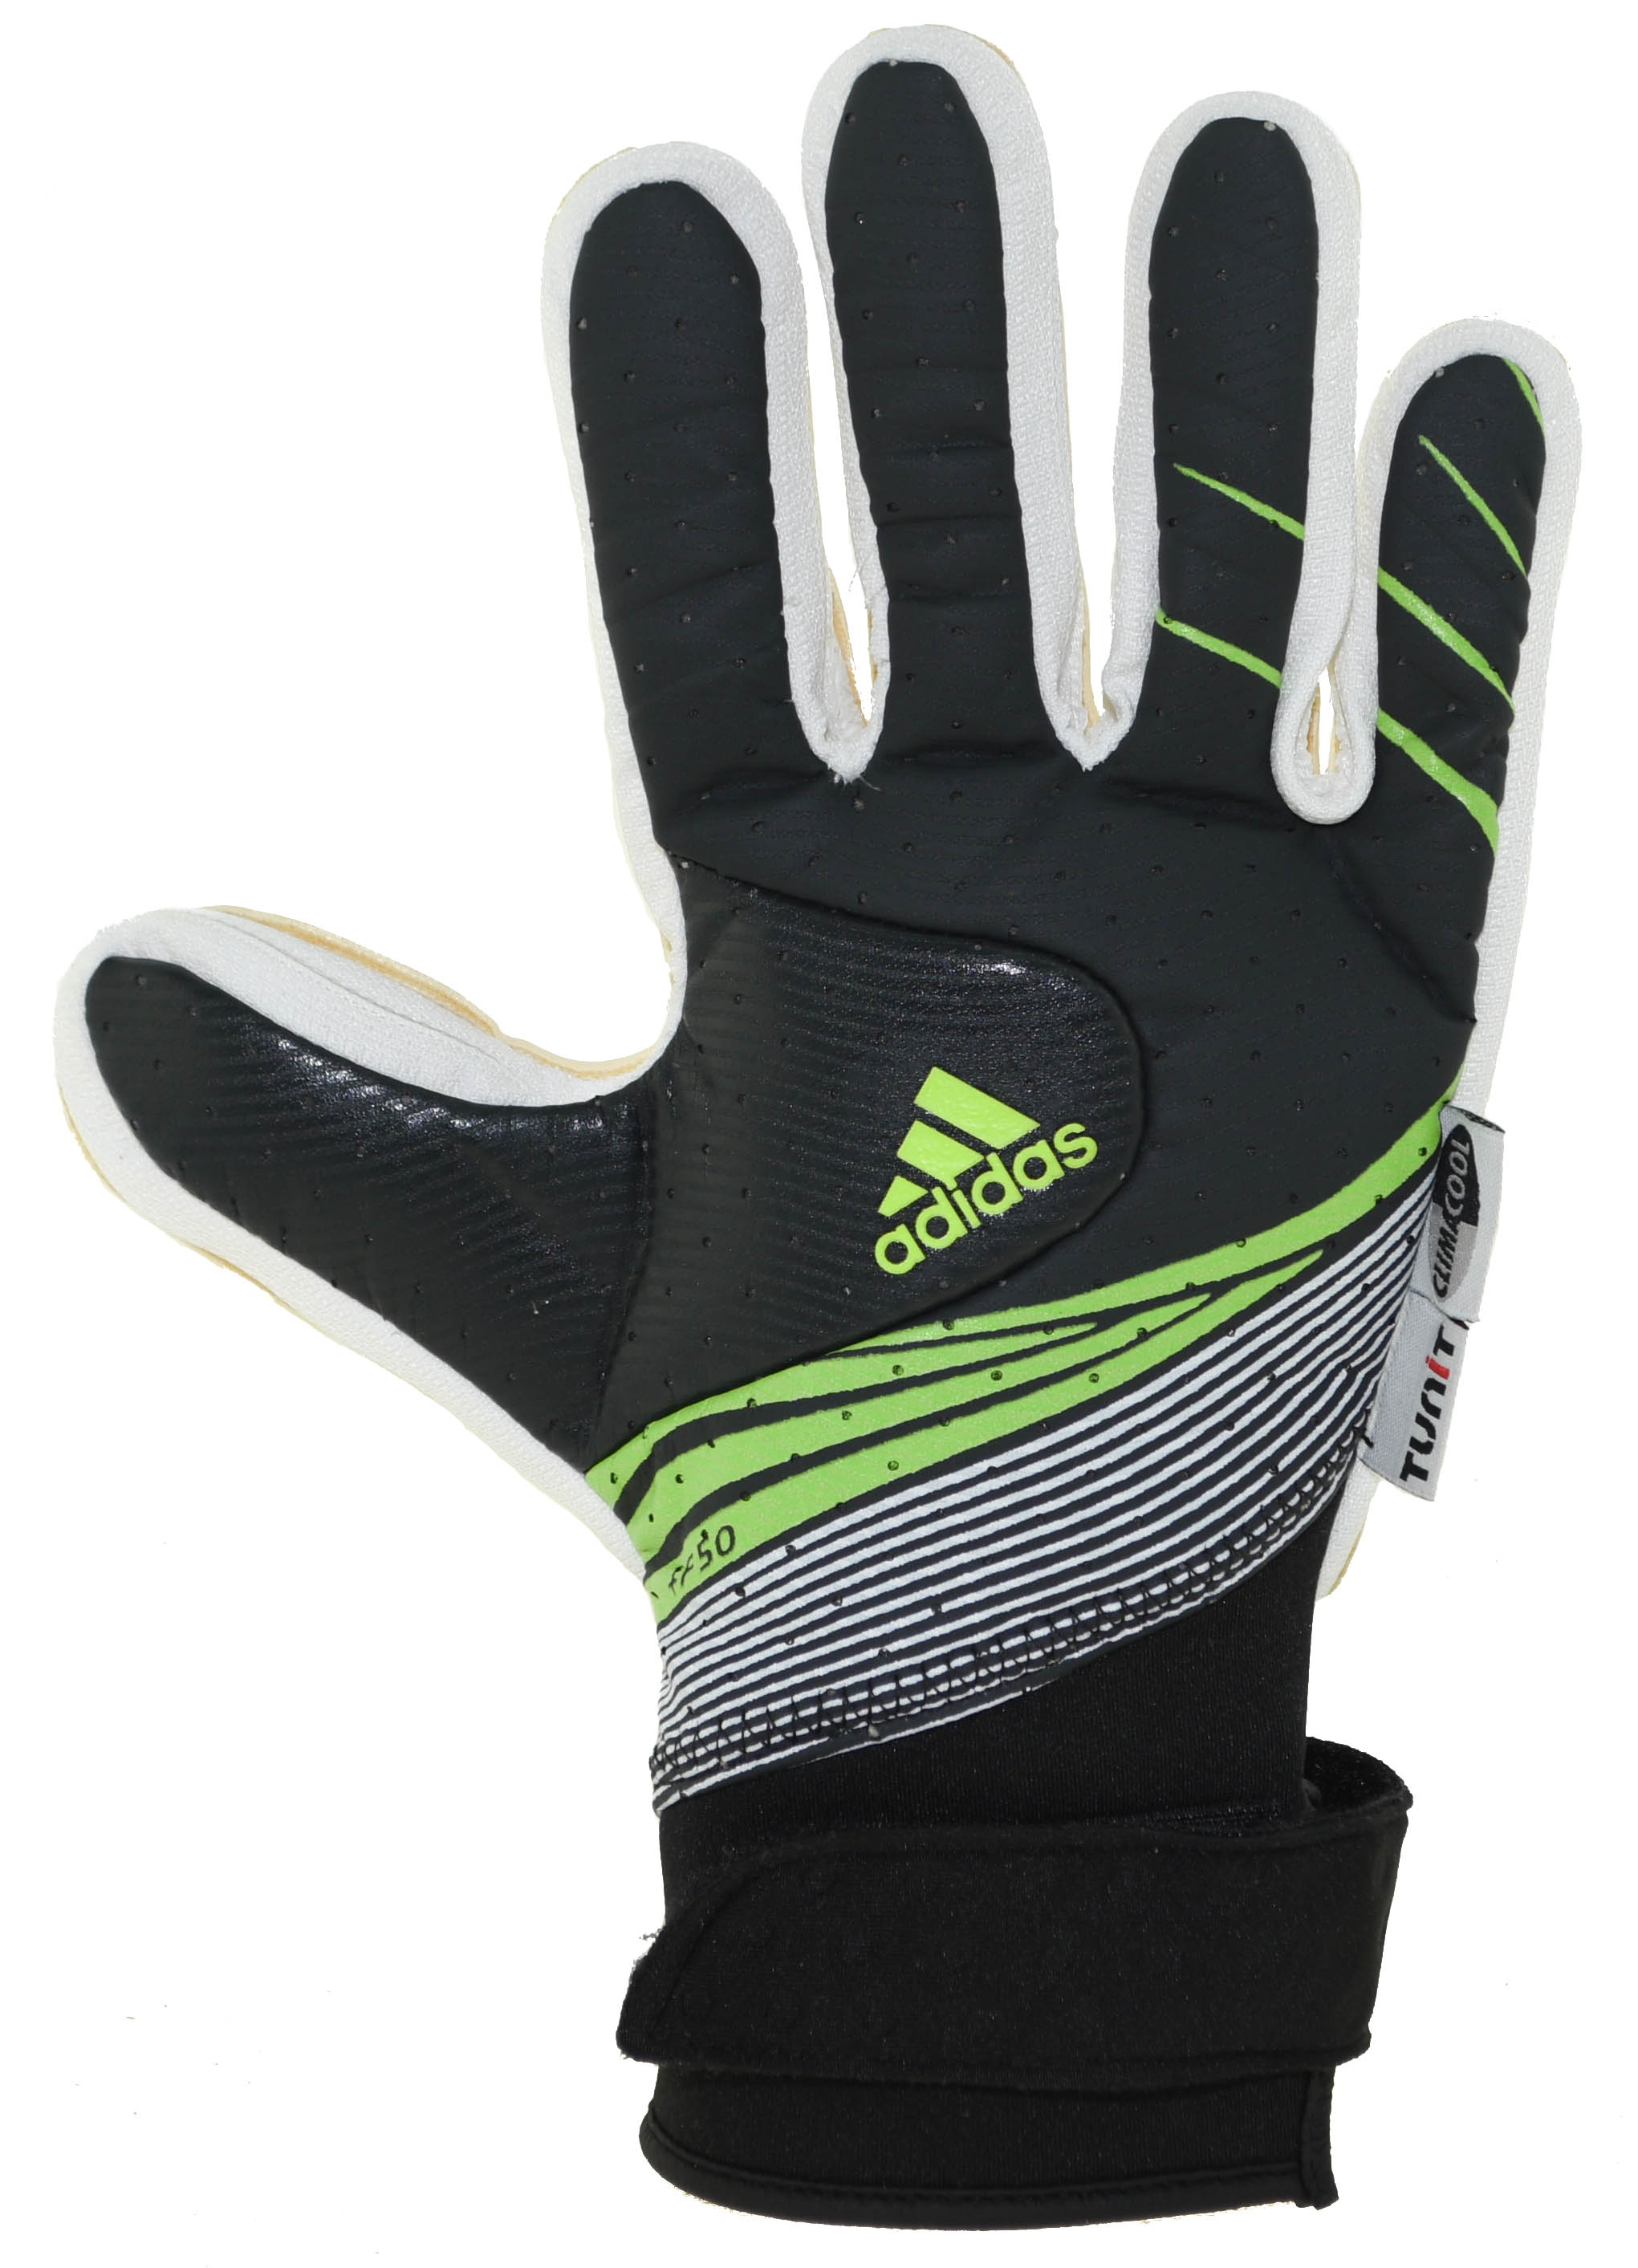 adidas goalkeeper gloves green